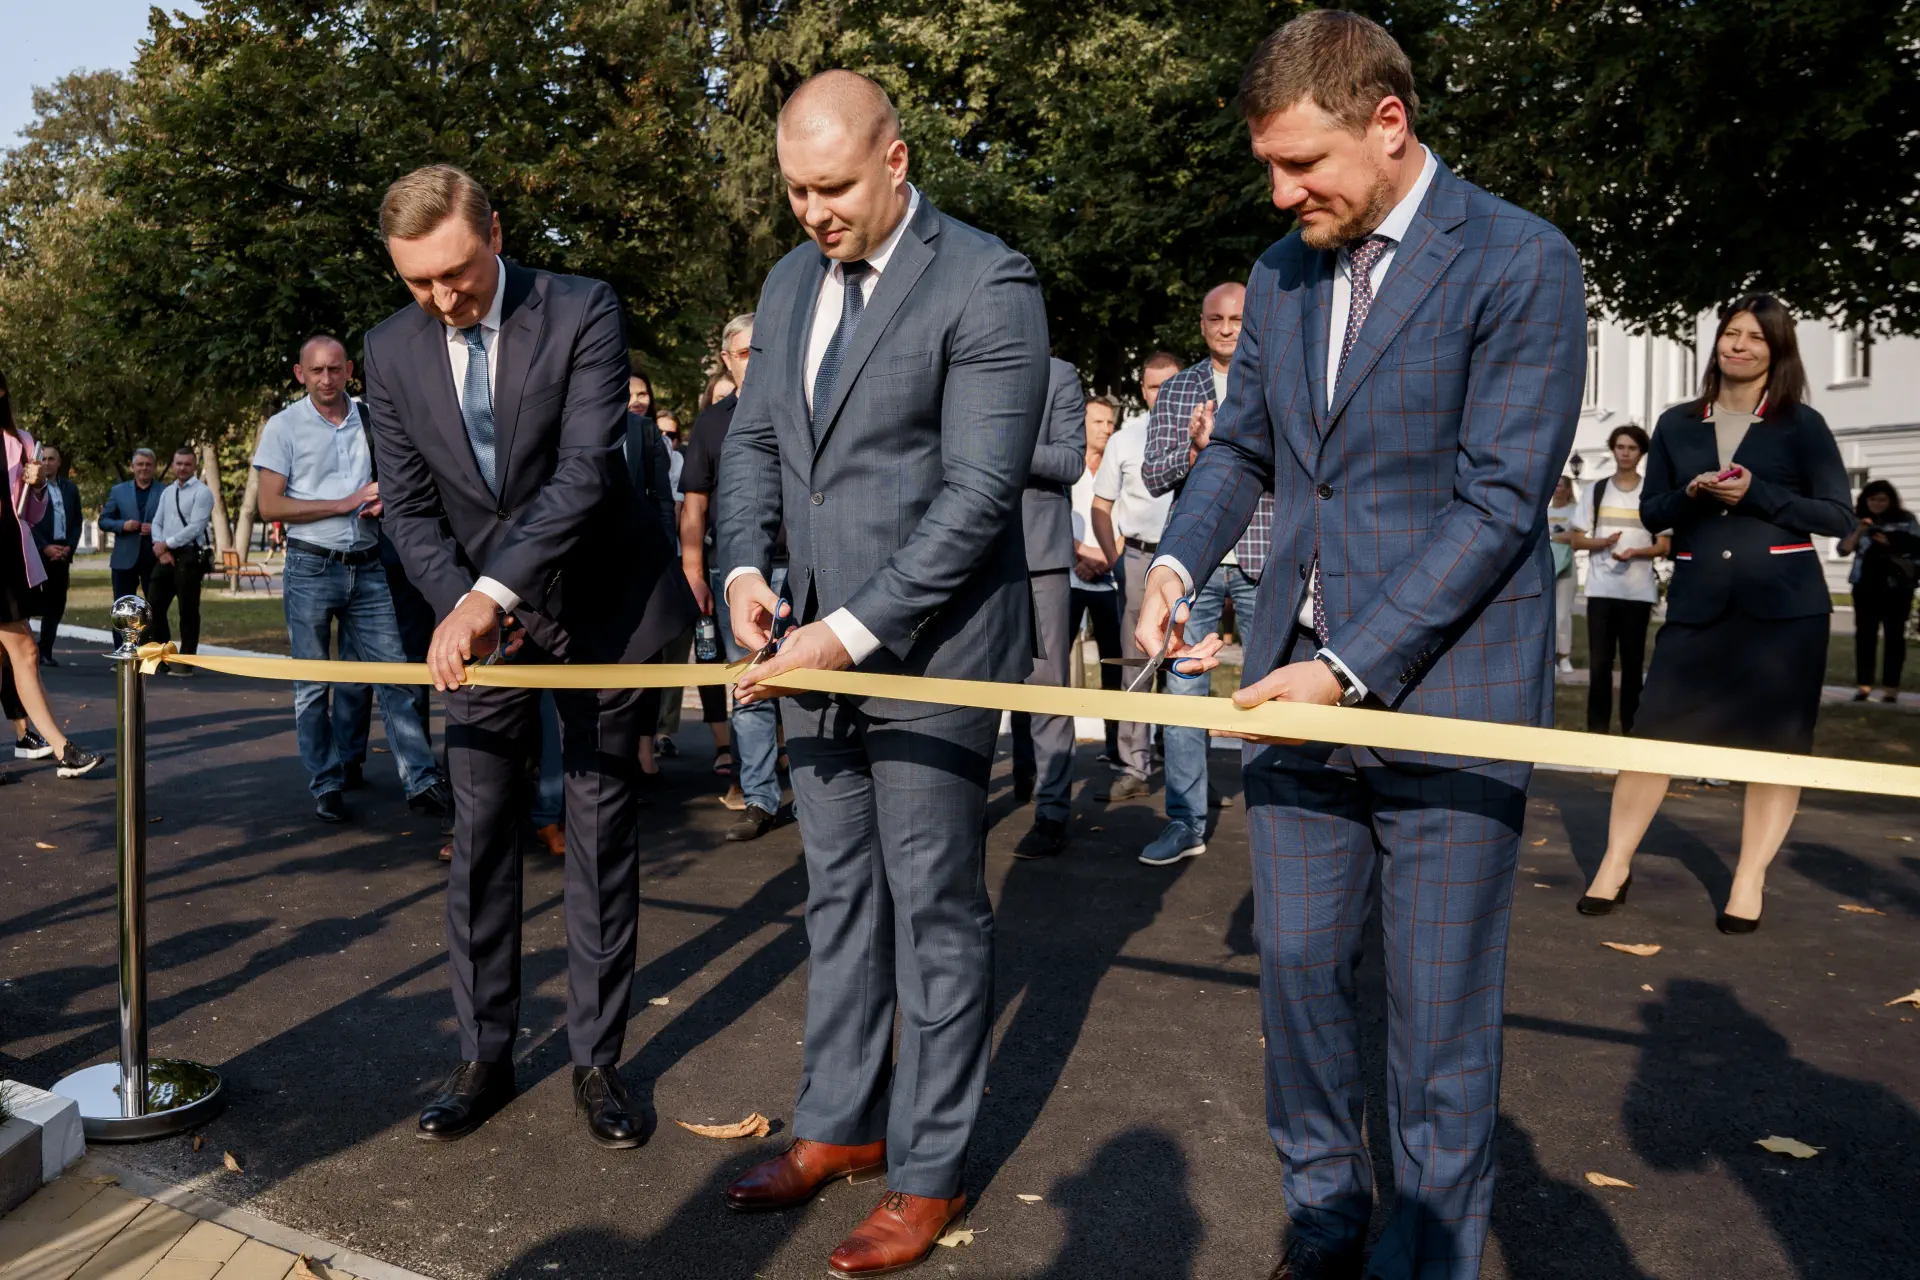 DTEK Oil&Gas opens an innovative location in Poltava Polytechnic